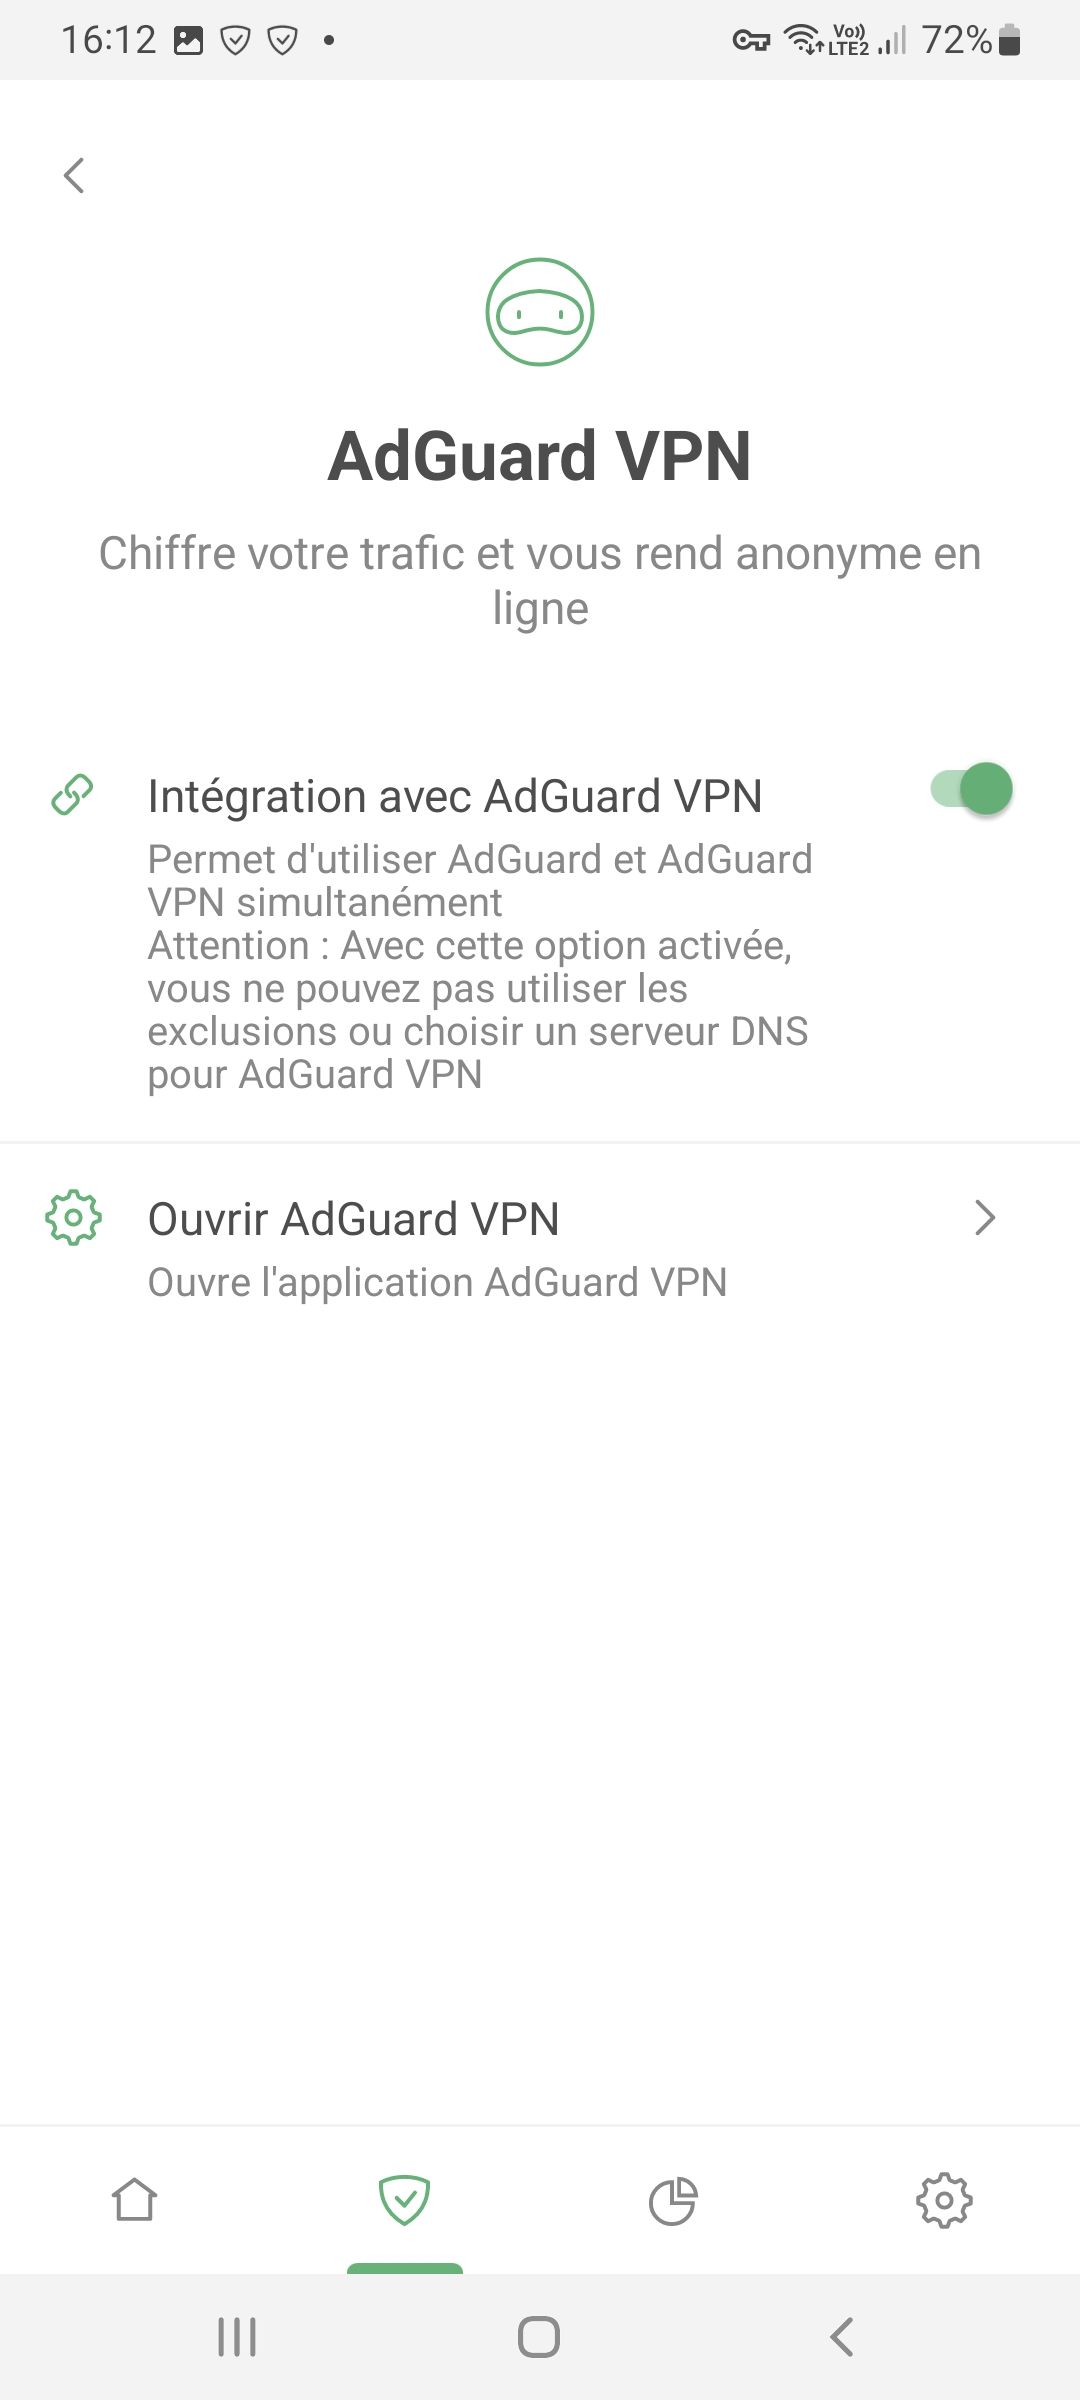 Intégration avec AdGuard VPN